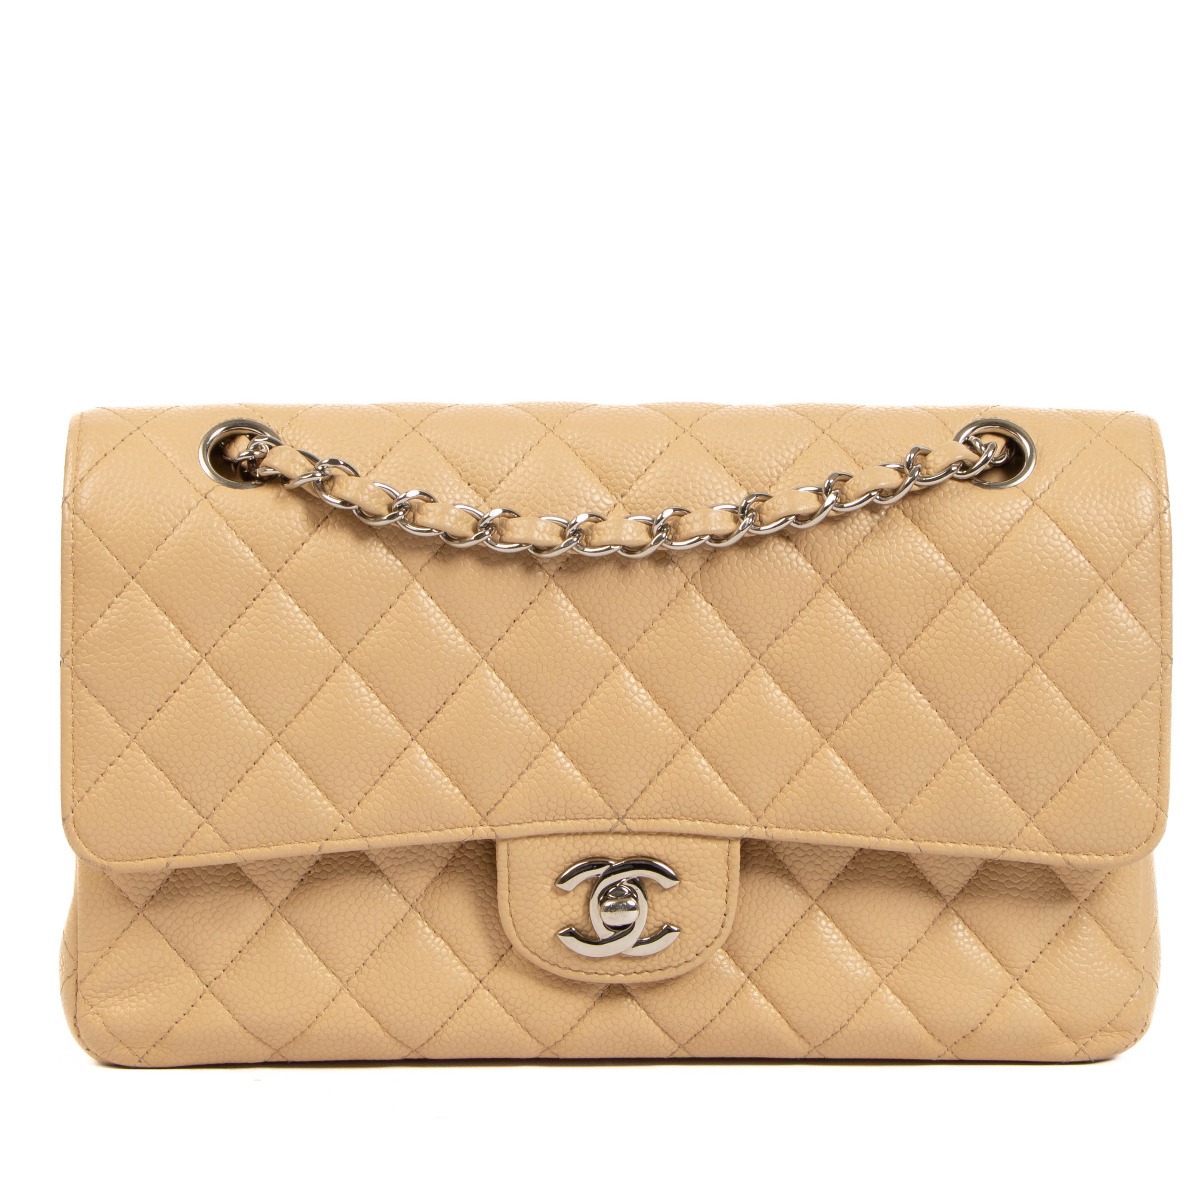 Buy Chanel Classic Flap Bag Lambskin Medium Beige 148104